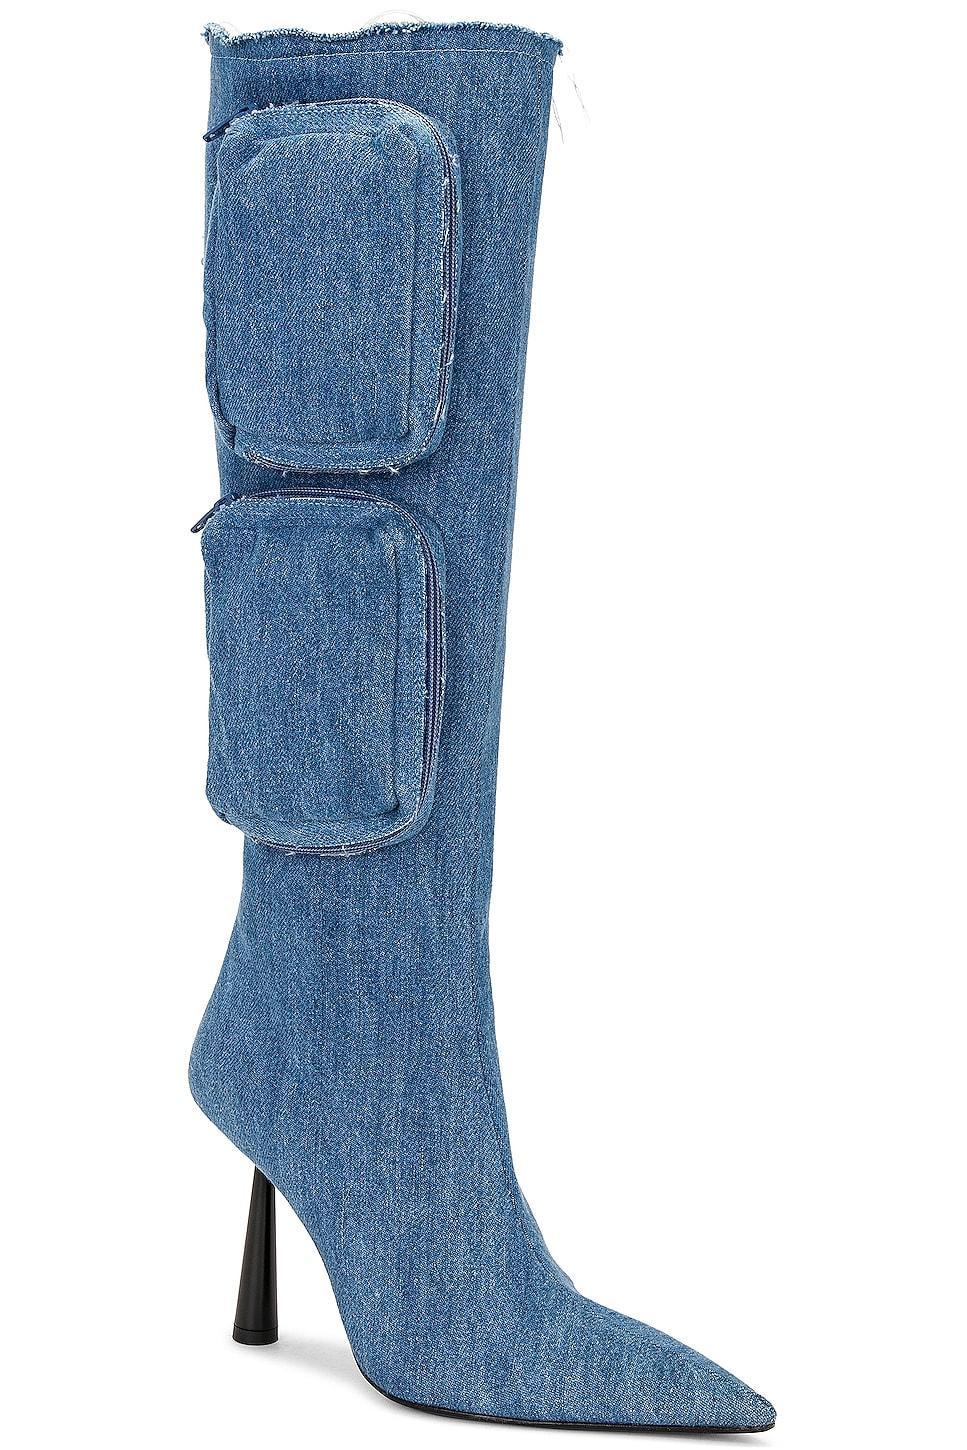 GIA BORGHINI Belvinia Knee High Boot in Blue Product Image